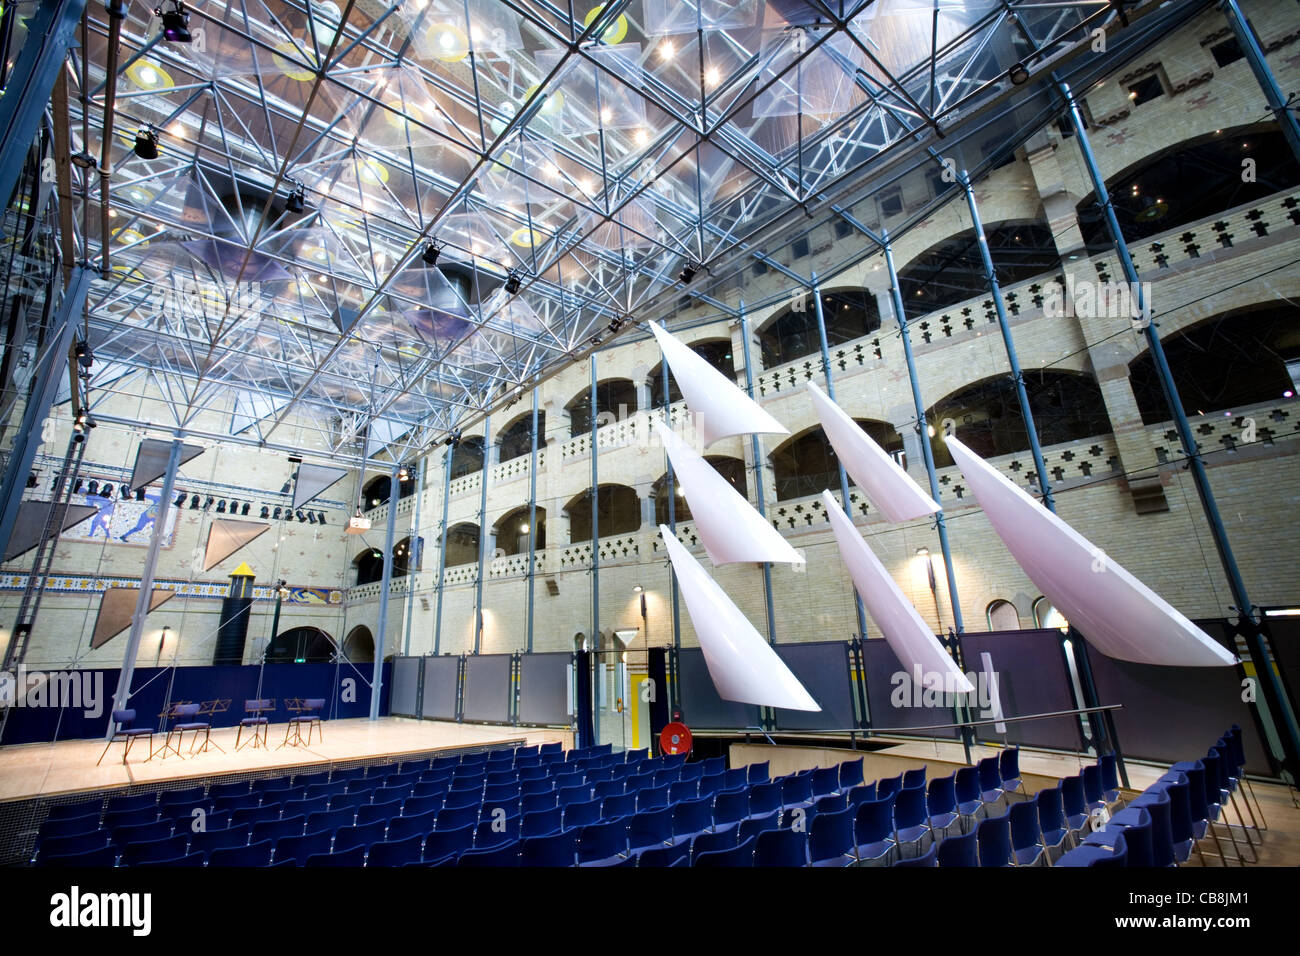 Beurs van Berlage concert hall, Amsterdam, Pays-Bas Banque D'Images